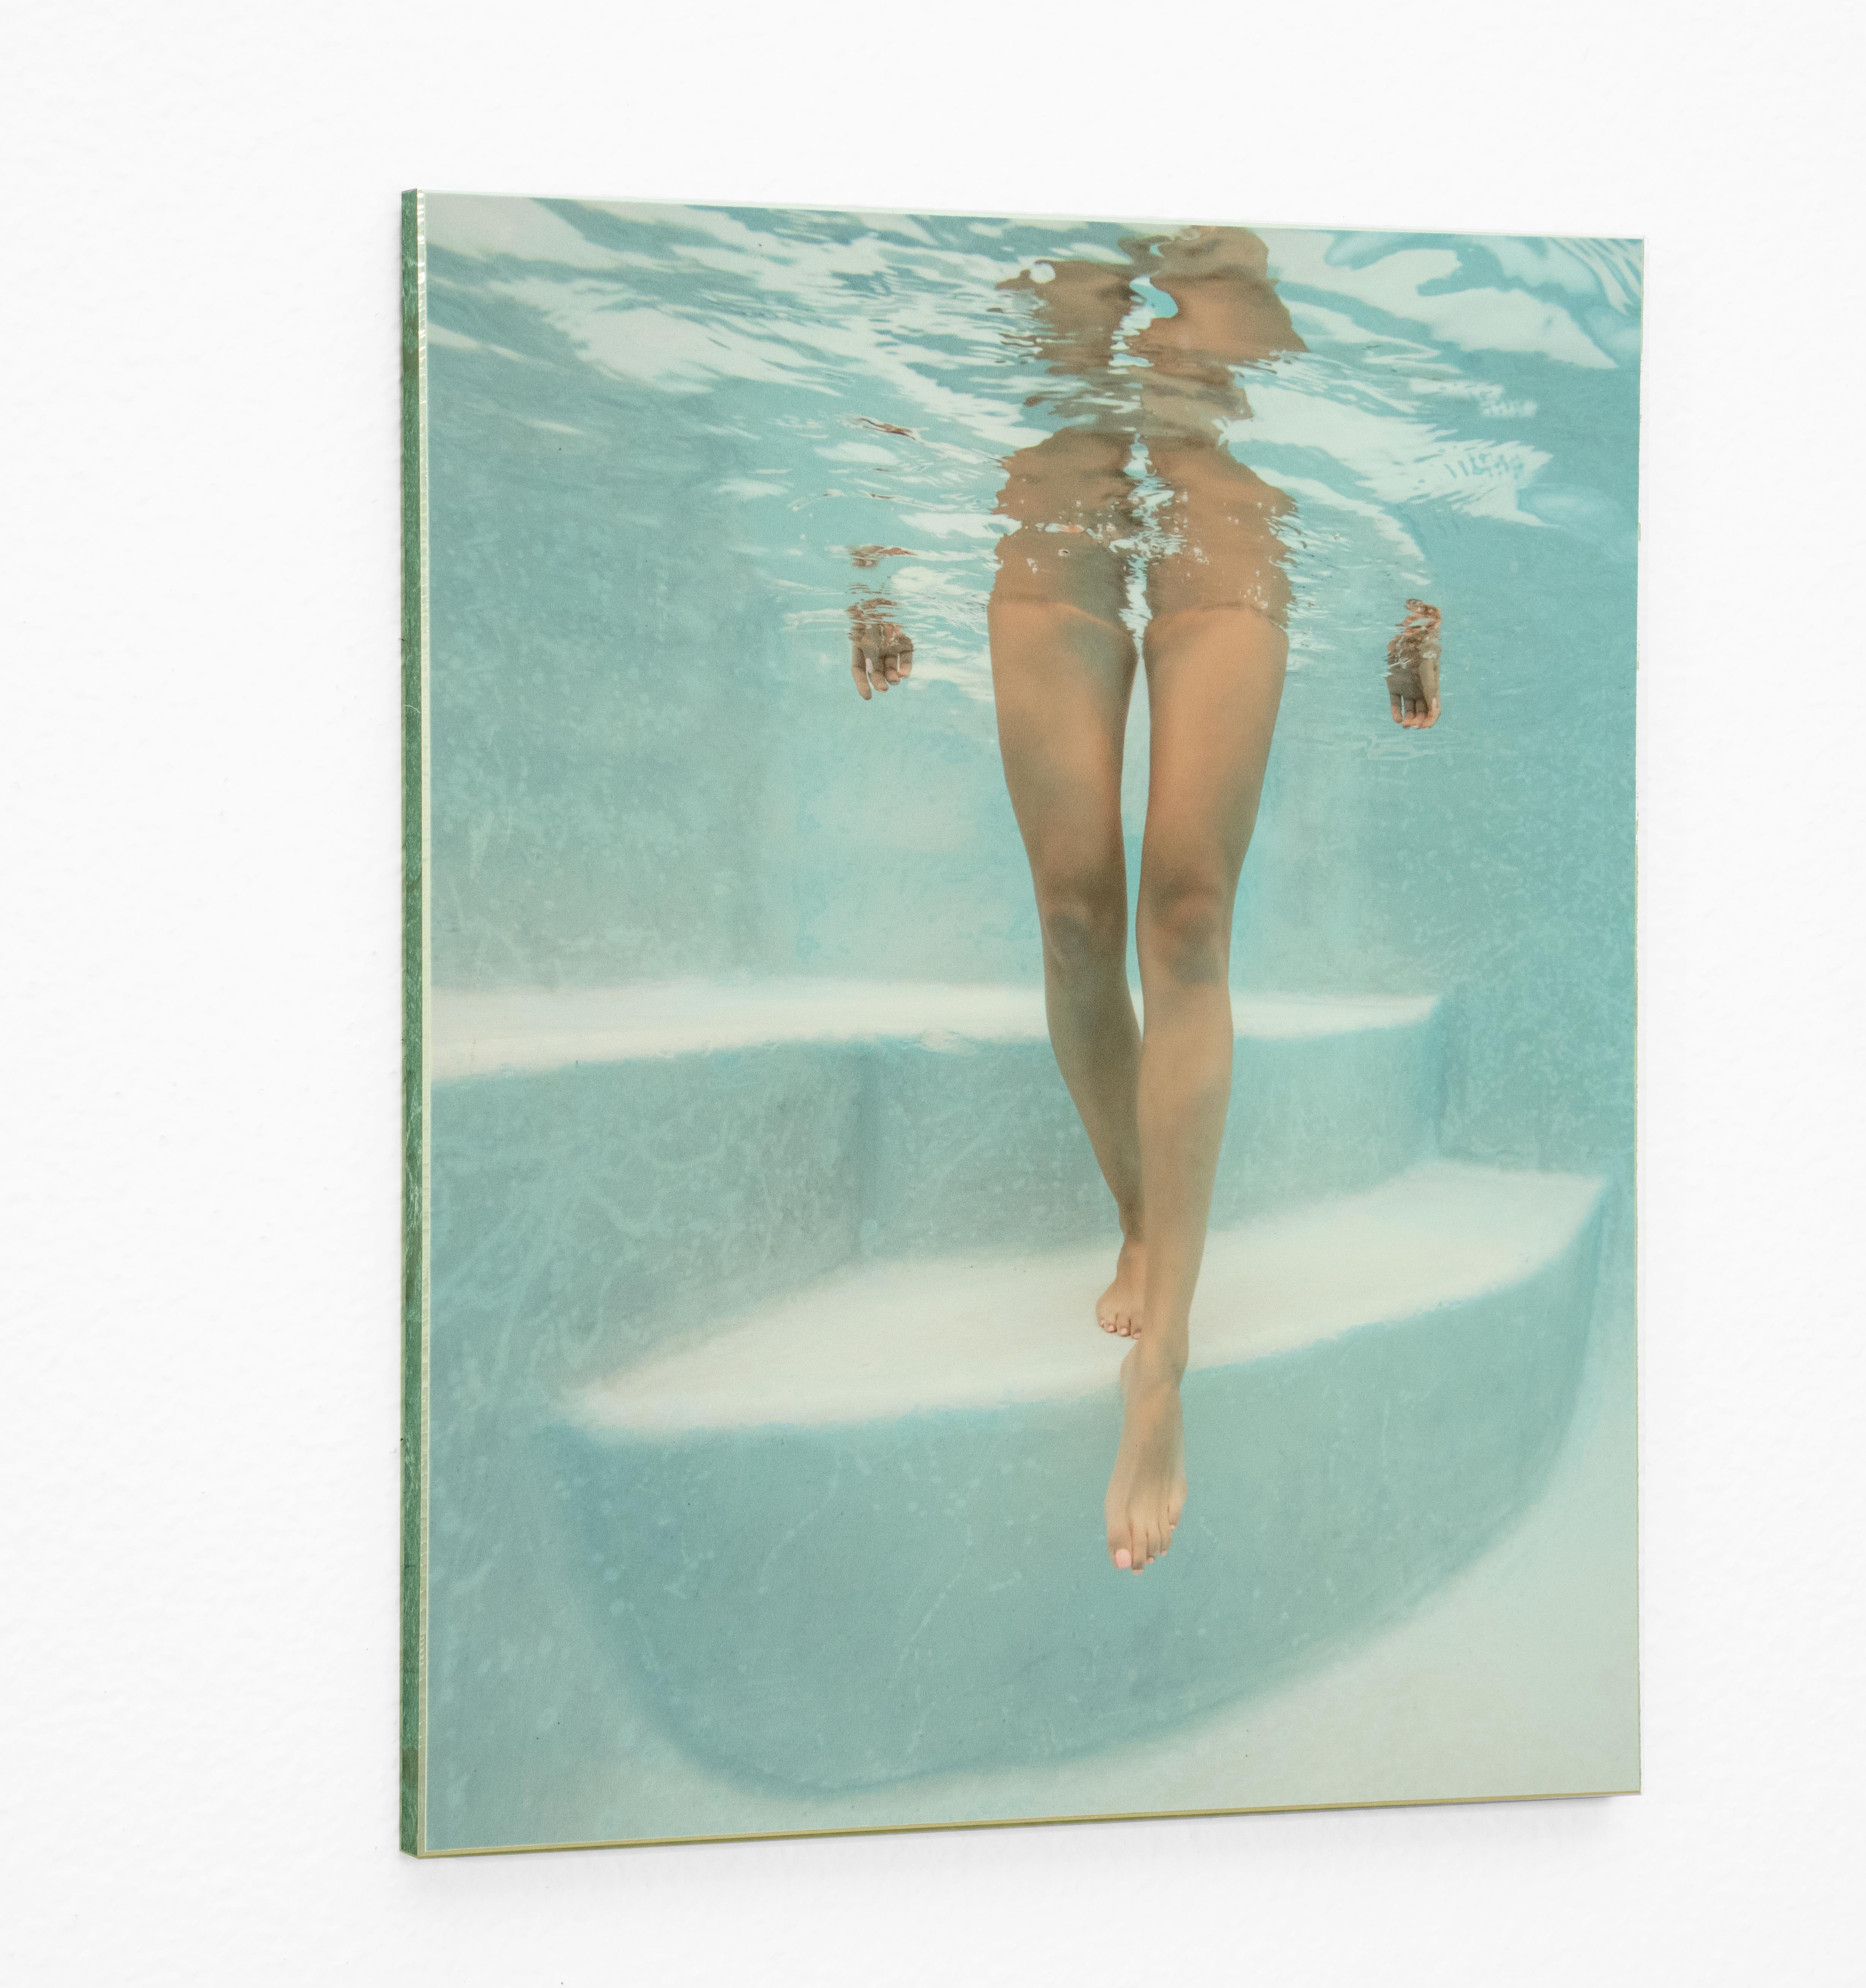 Steps - underwater photograph - print on aluminum 12 x 10